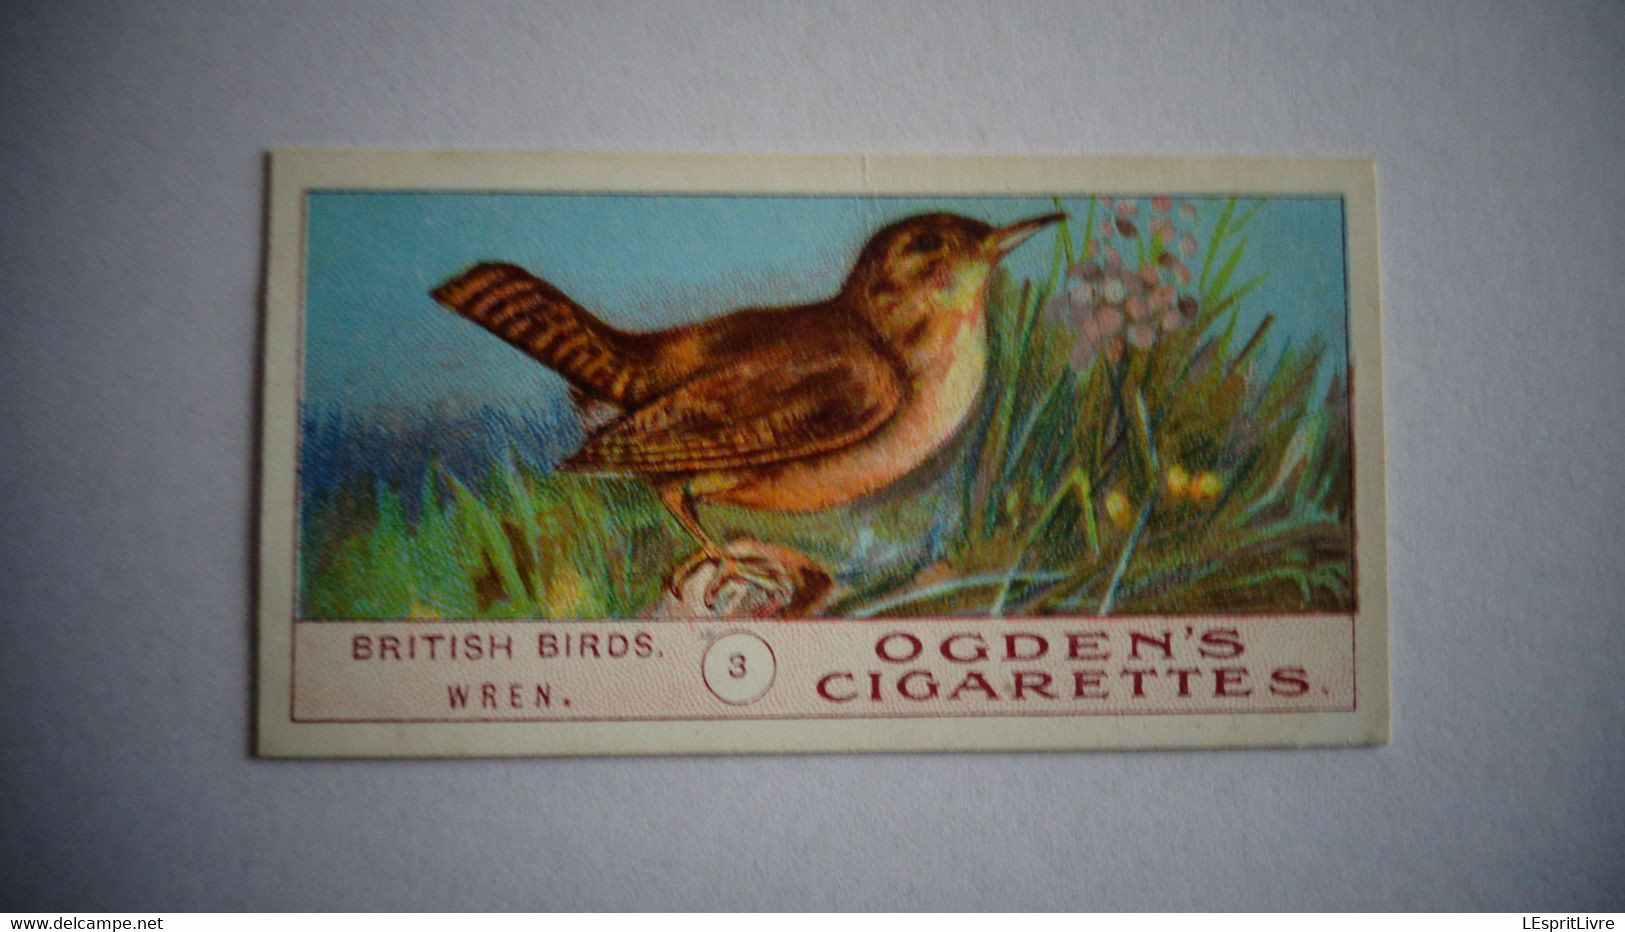 BRITISH BIRDS N° 3 WREN Oiseau Bird  Cigarettes OGDEN'S Tobacco Vignette Trading Card Chromo - Ogden's